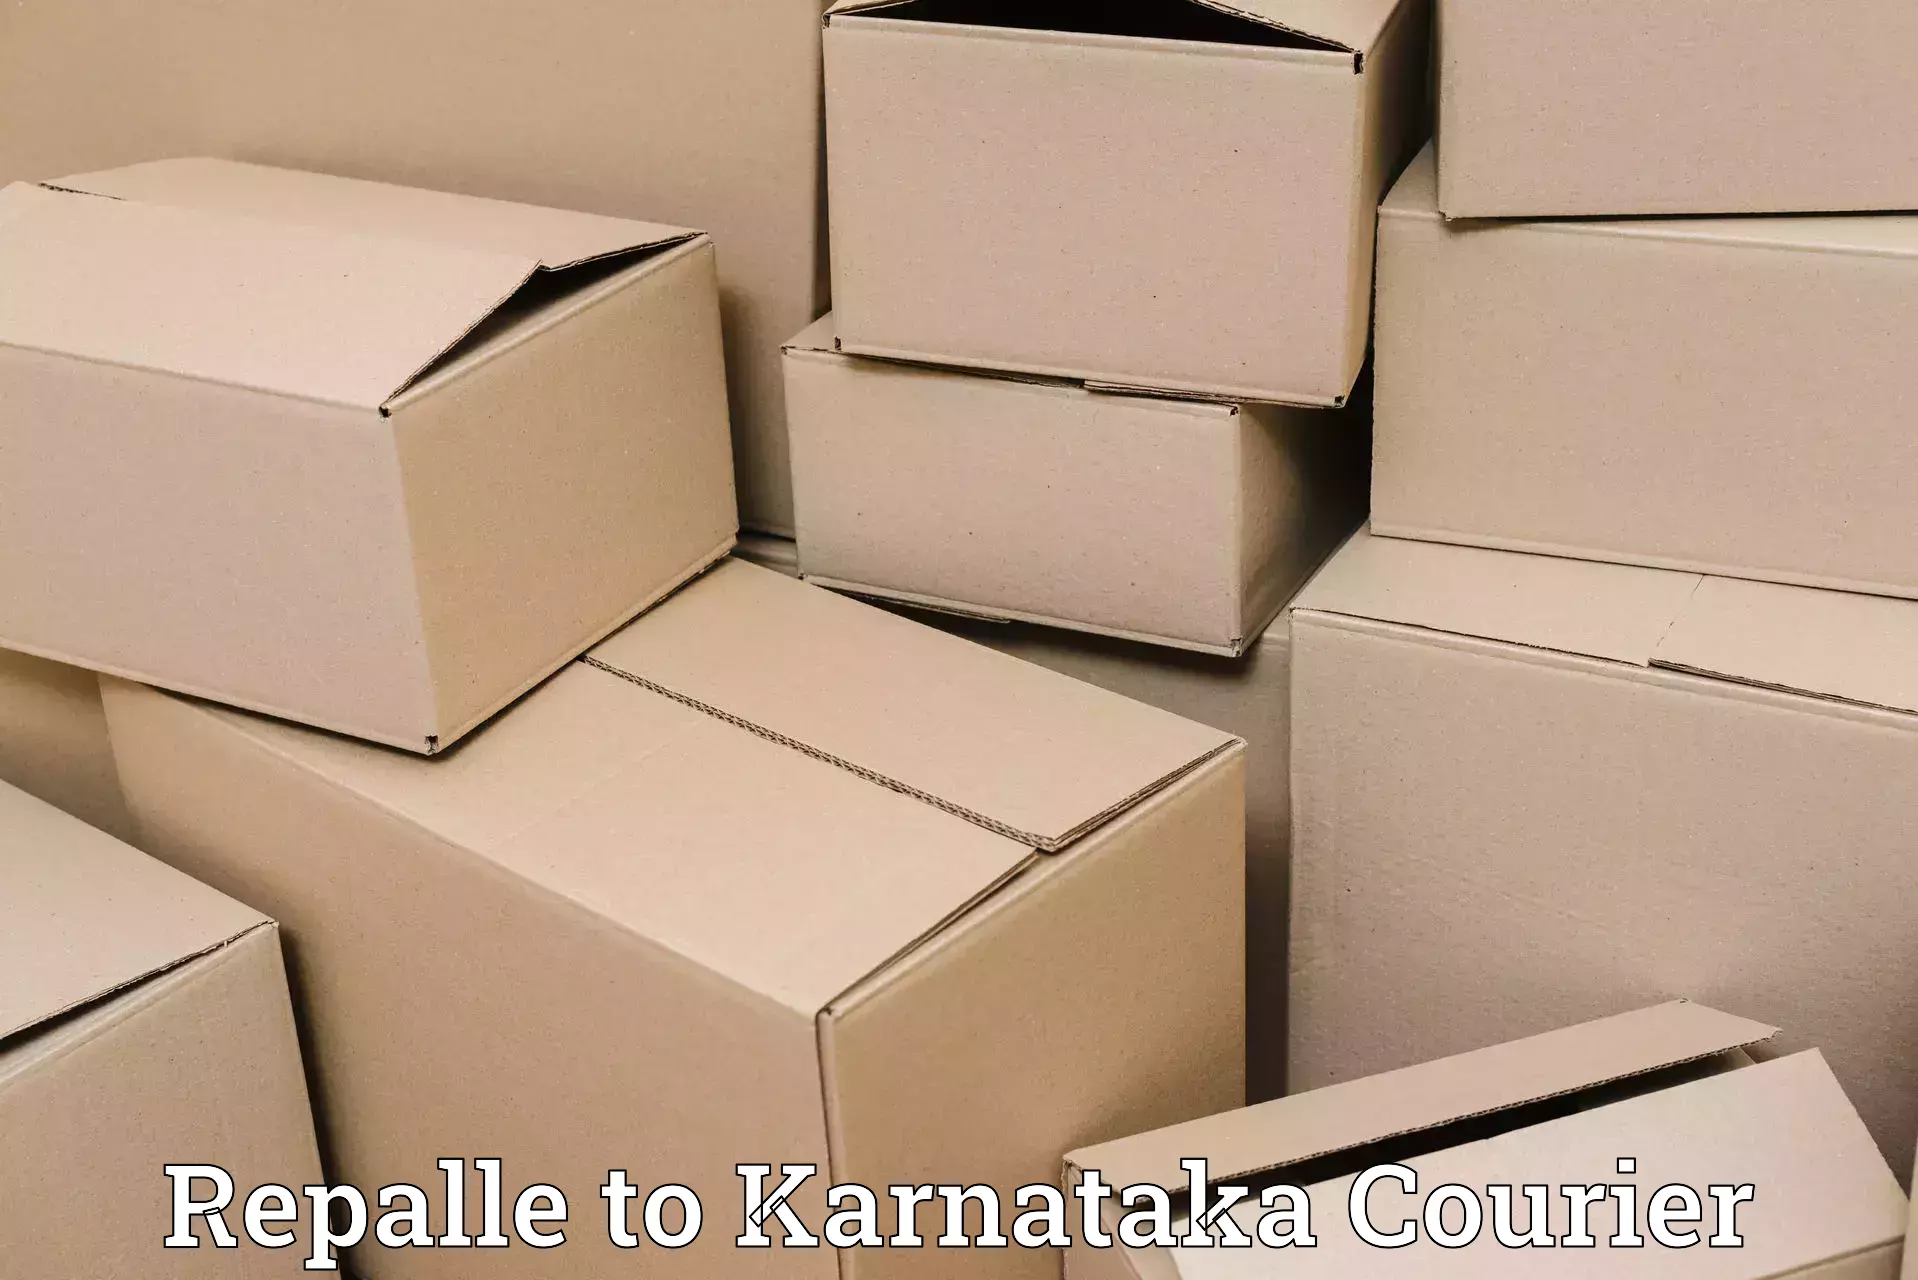 Online luggage shipping Repalle to Karnataka